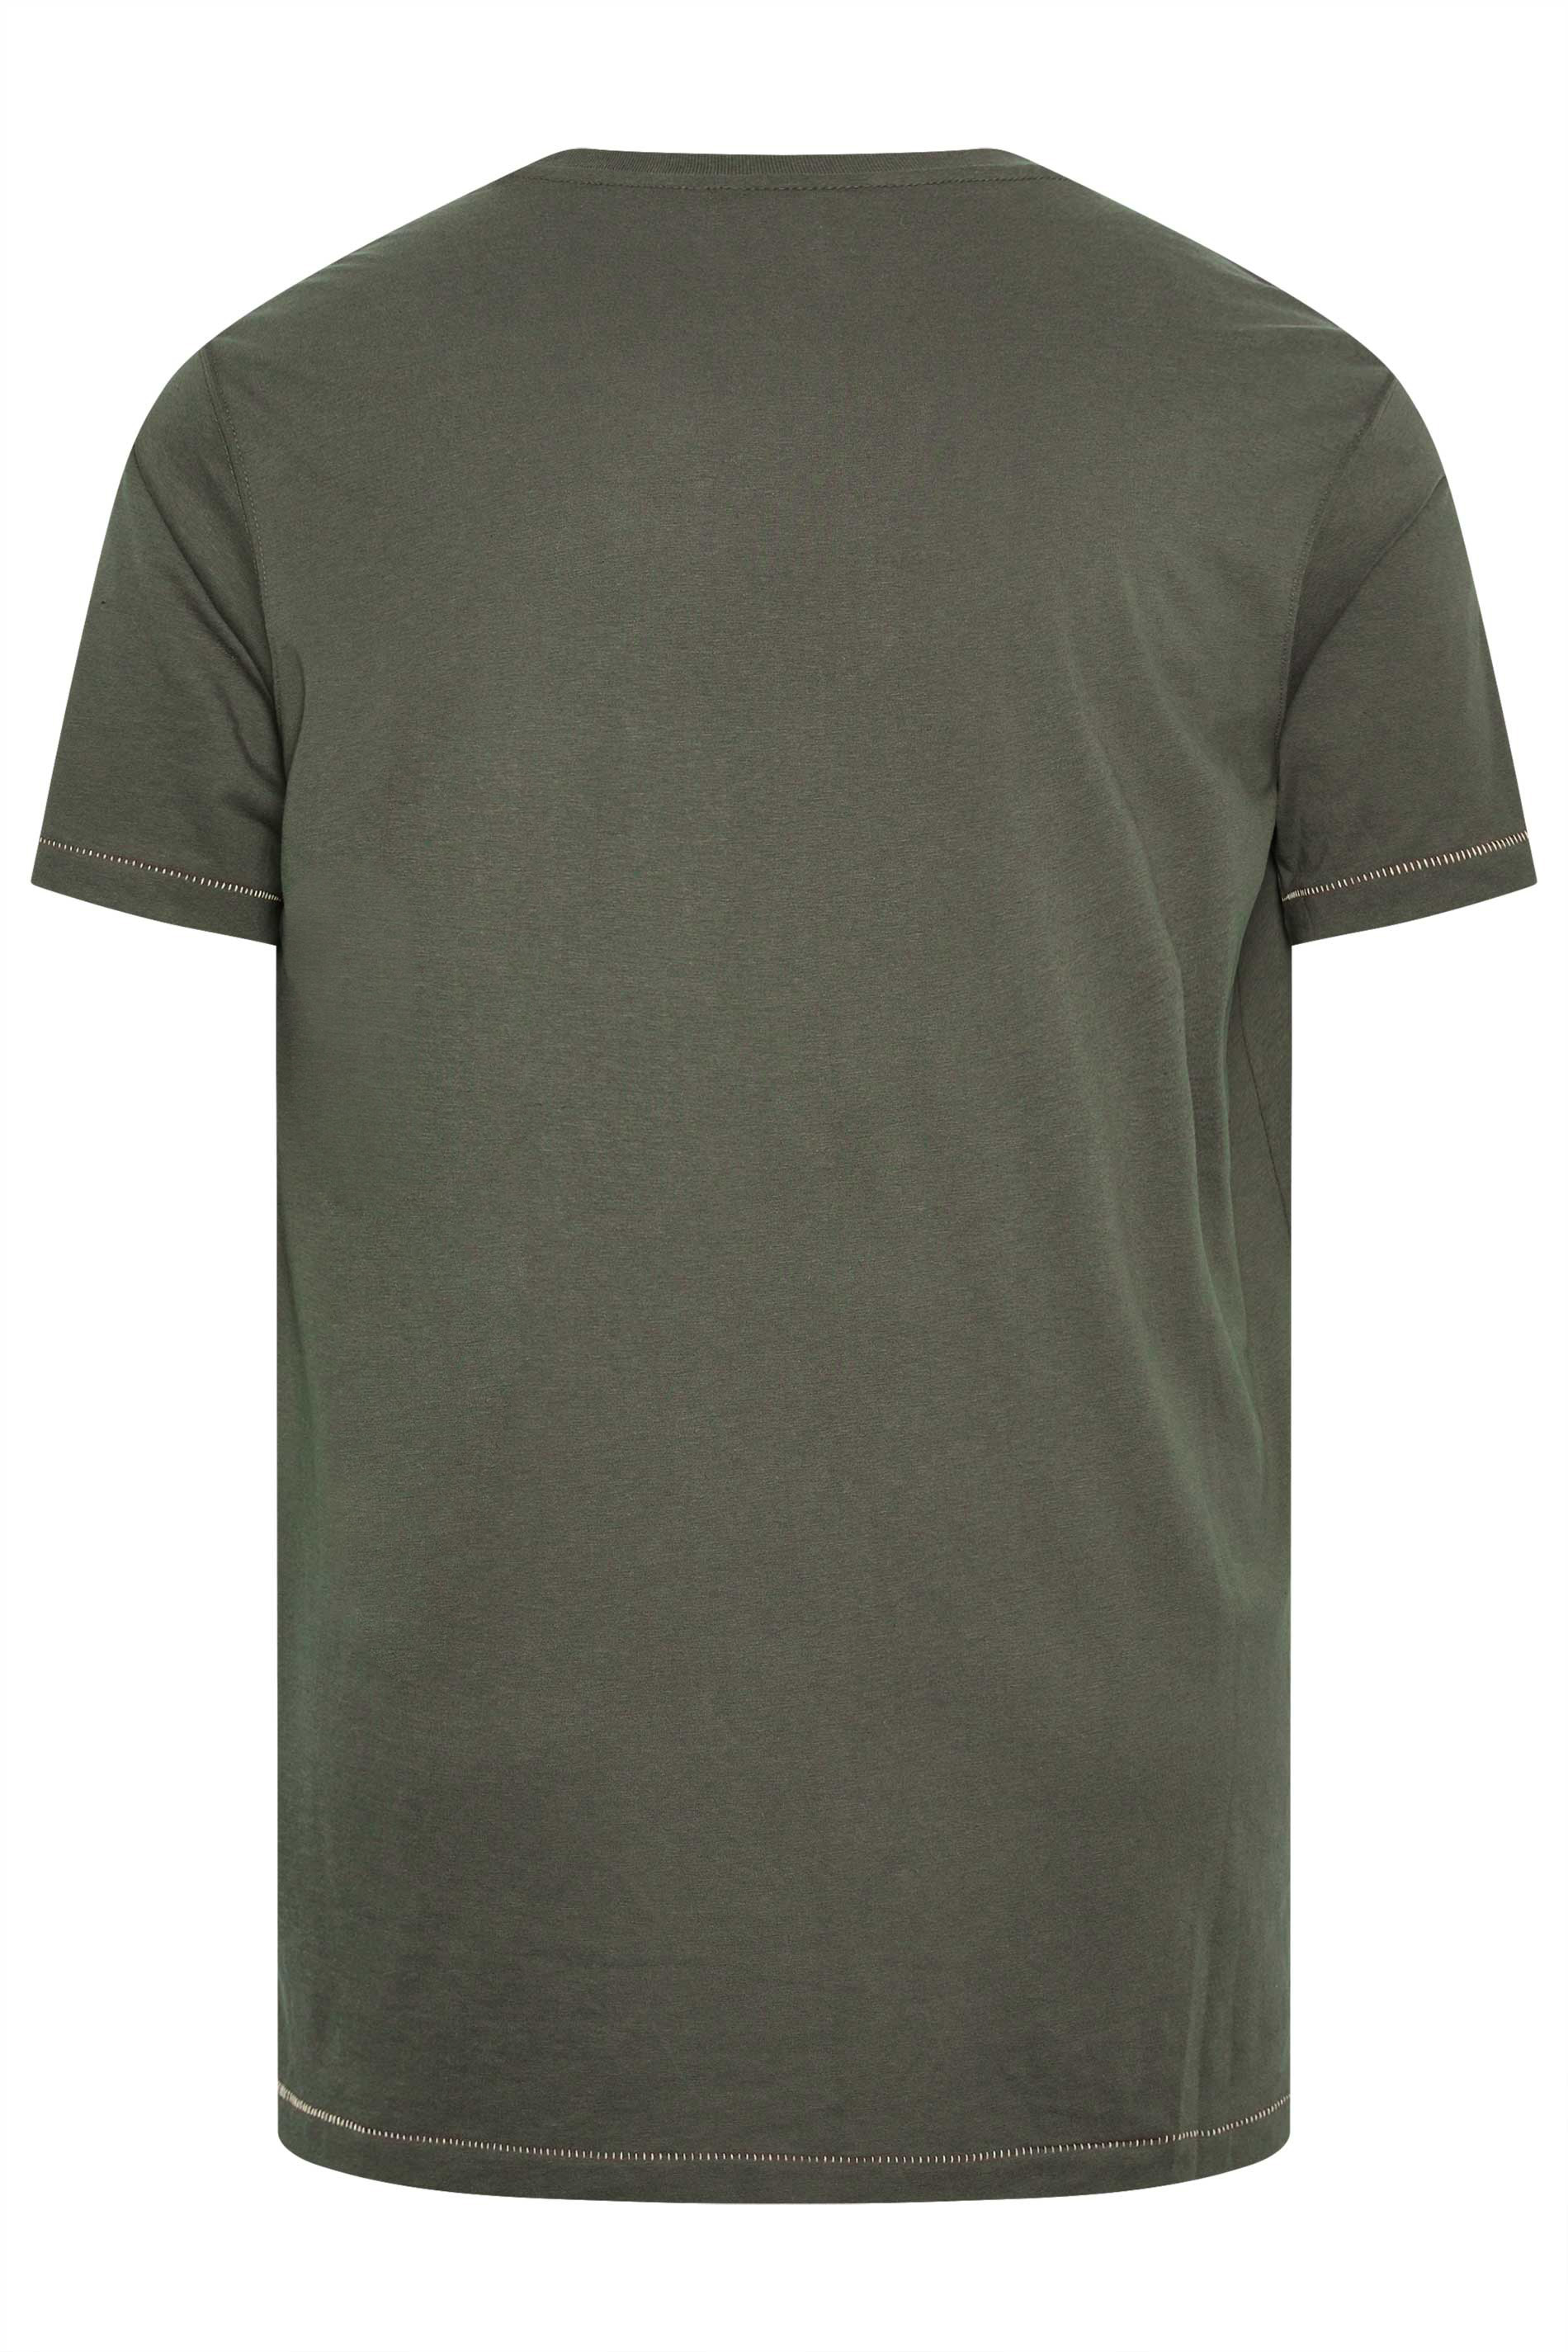 D555 Big & Tall Khaki Green Gas Monkey Graphic T-Shirt | BadRhino